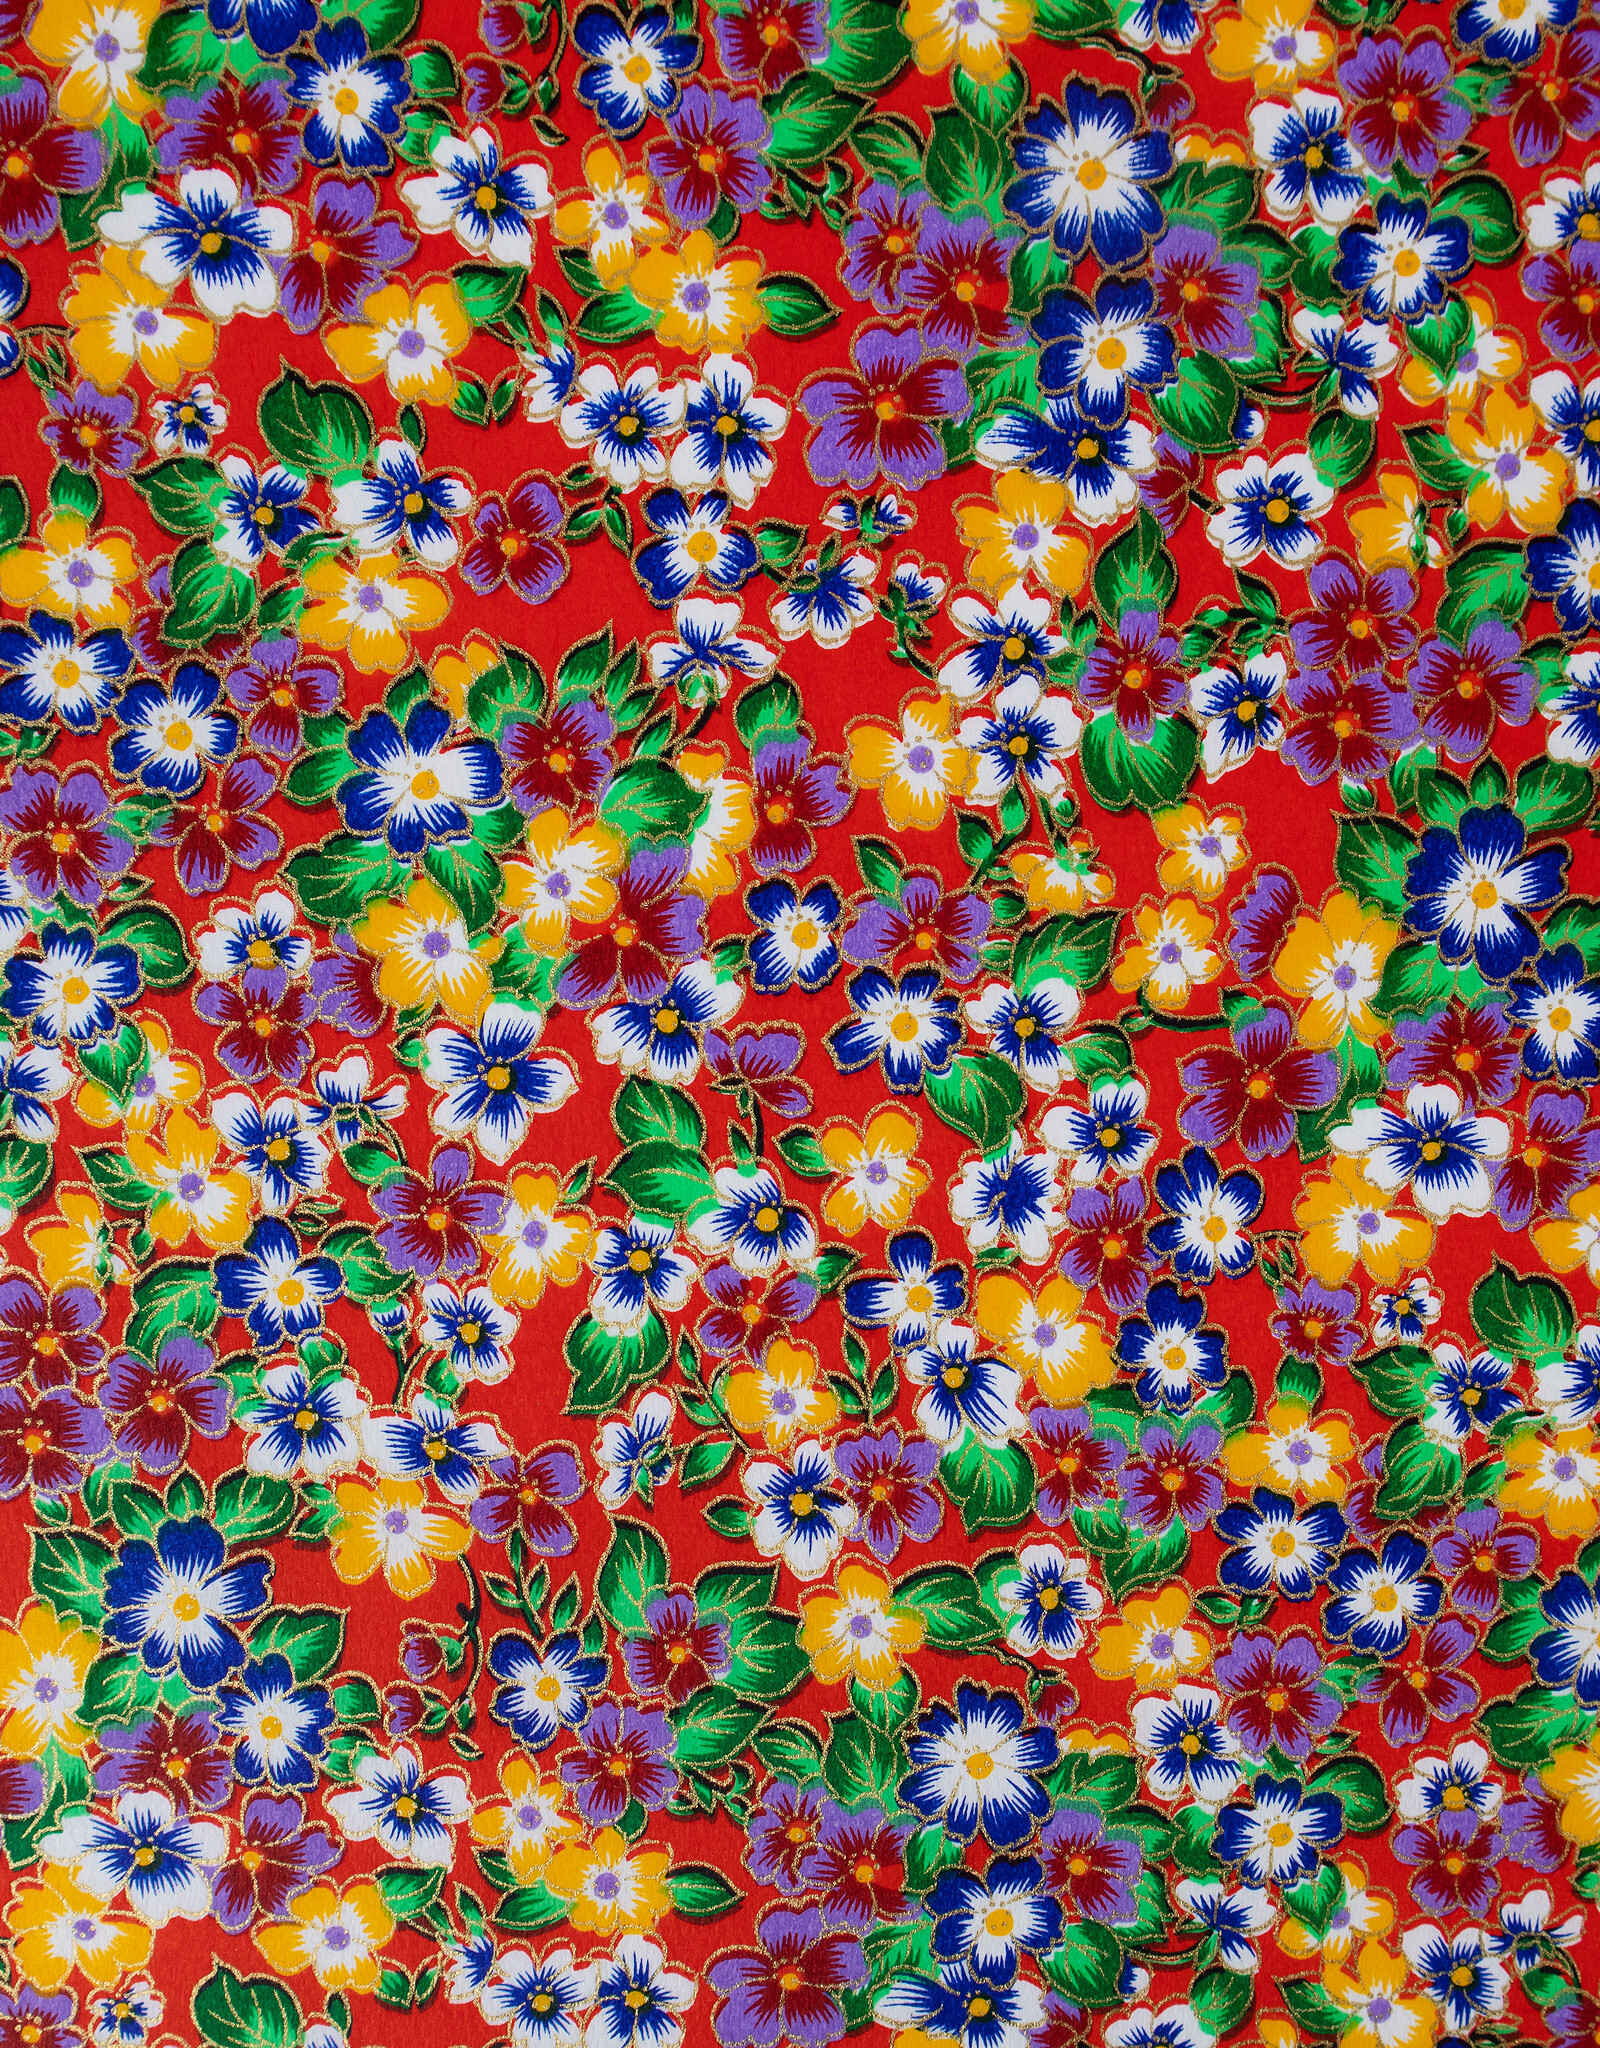 AITOH Aitoh Yuzenshi: Colorful Flowers, 21.5" x 31.5"